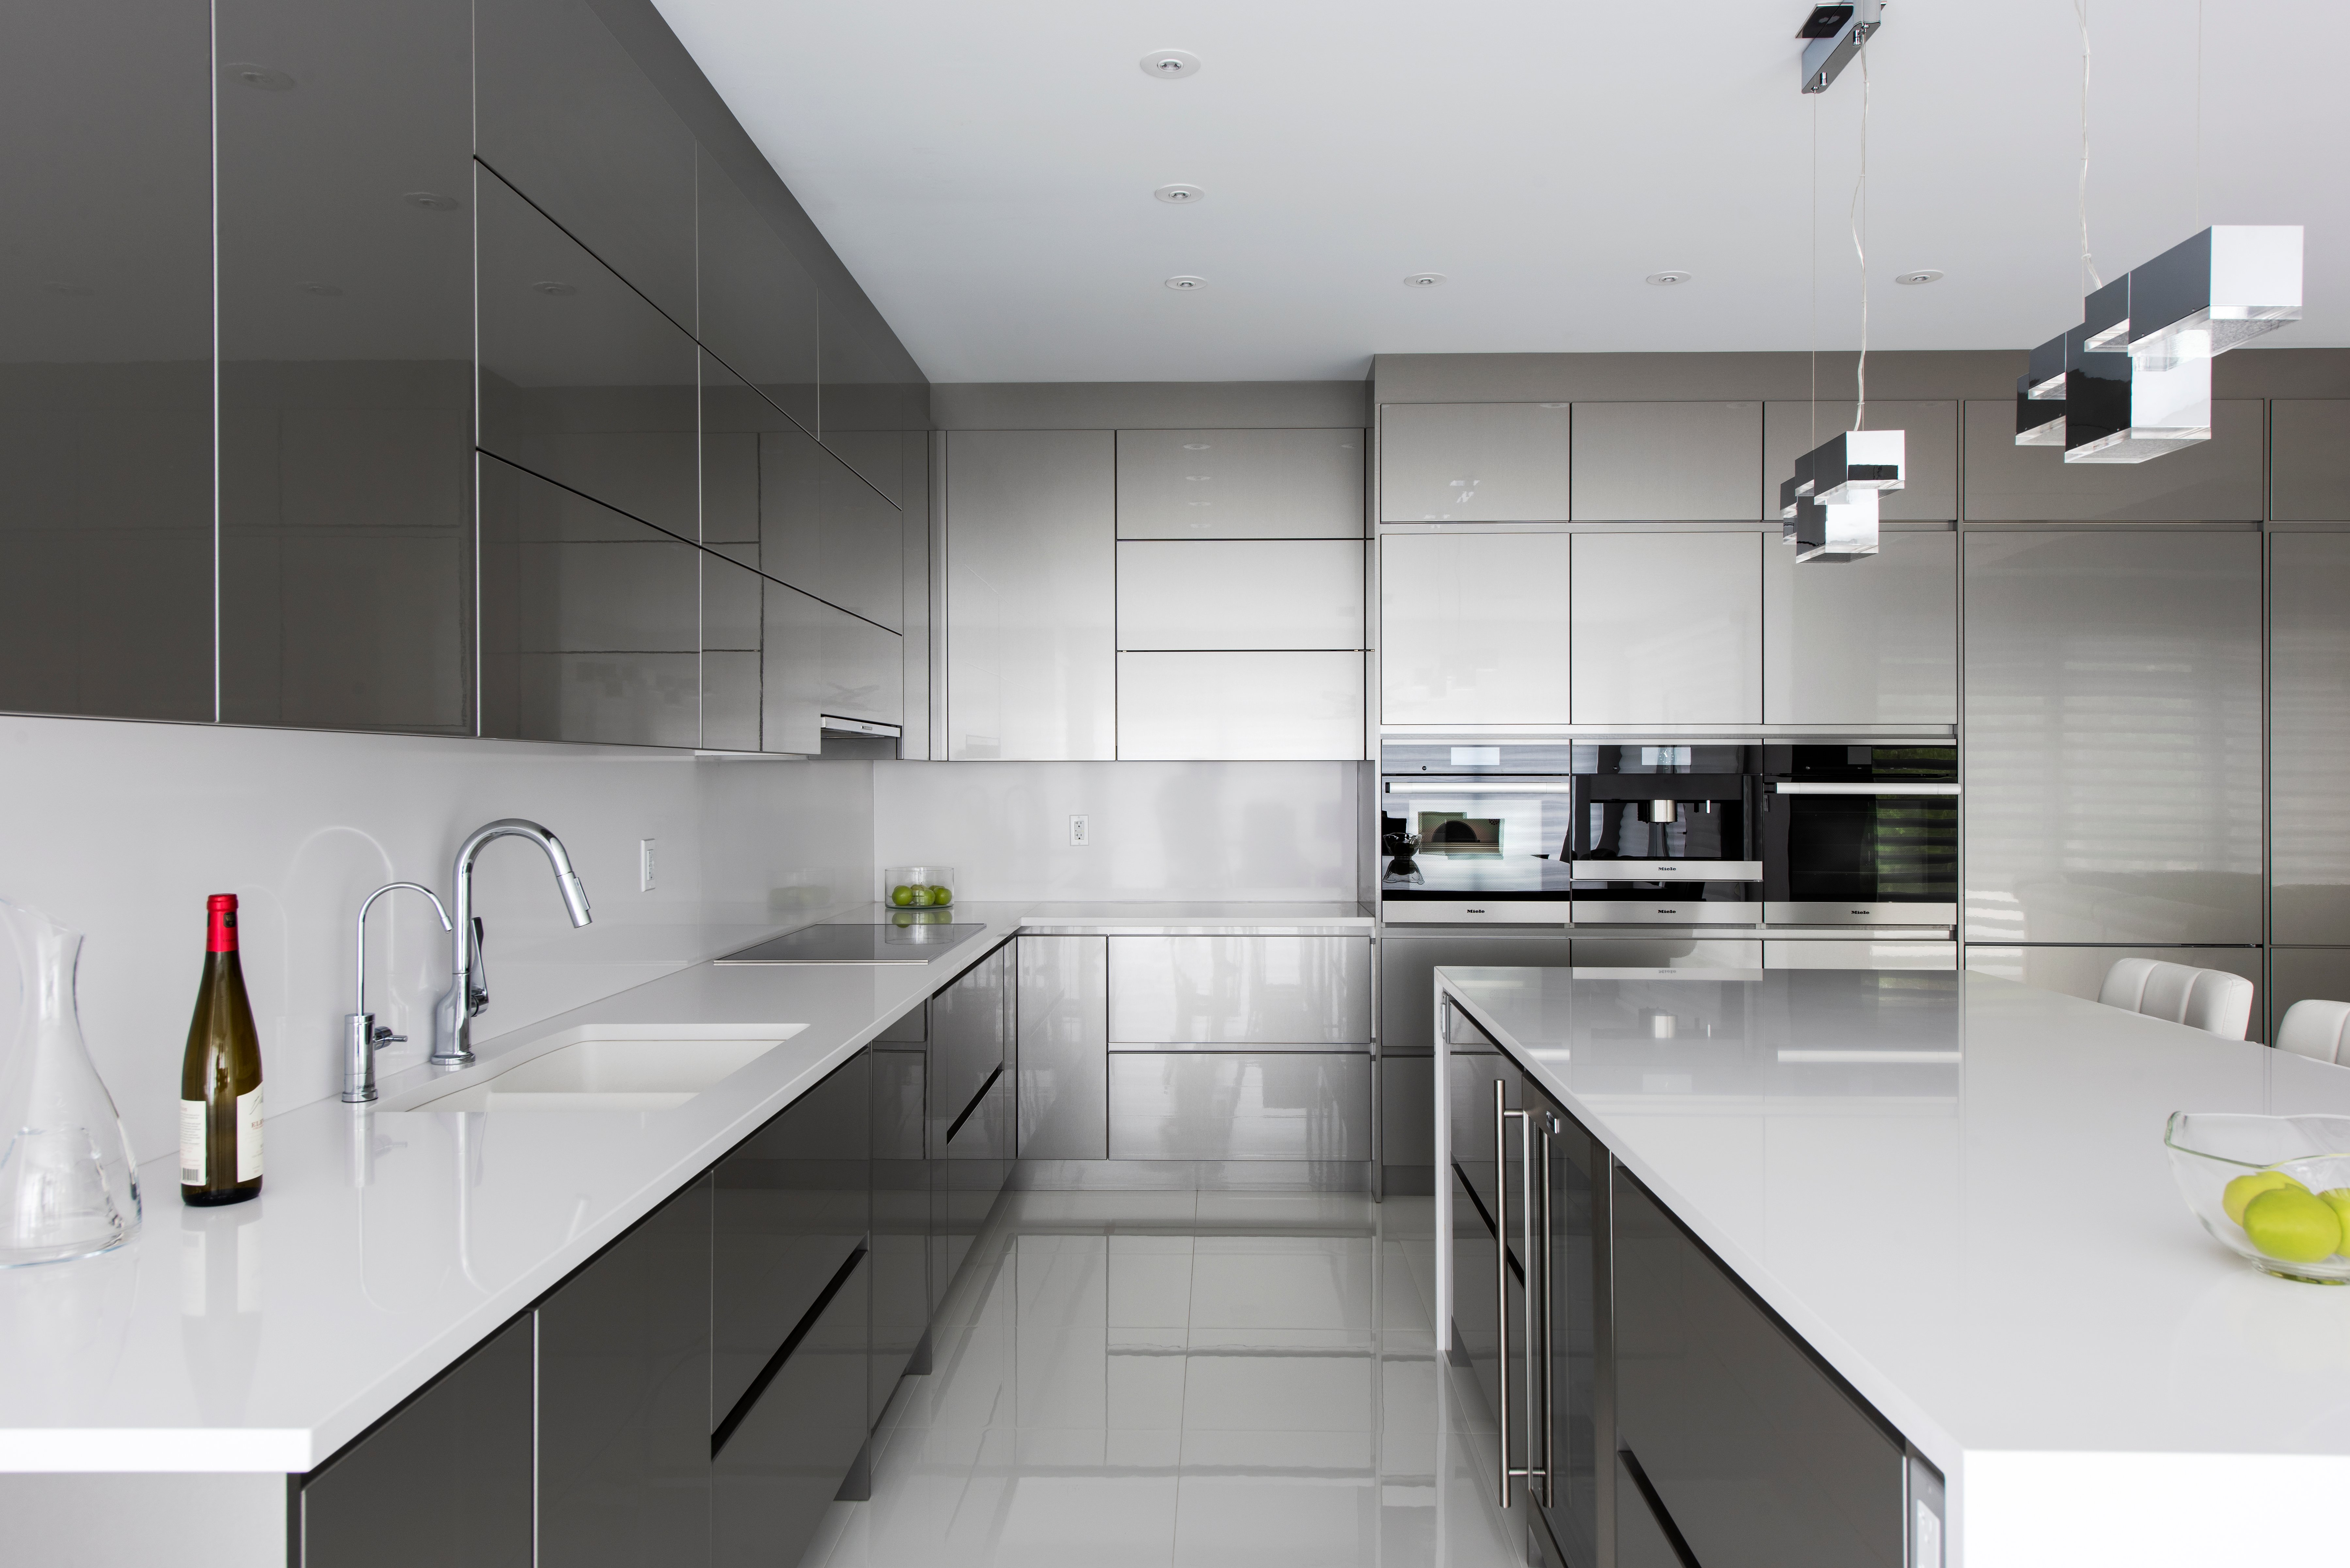 An ultra-modern kitchen design by Deslaurier